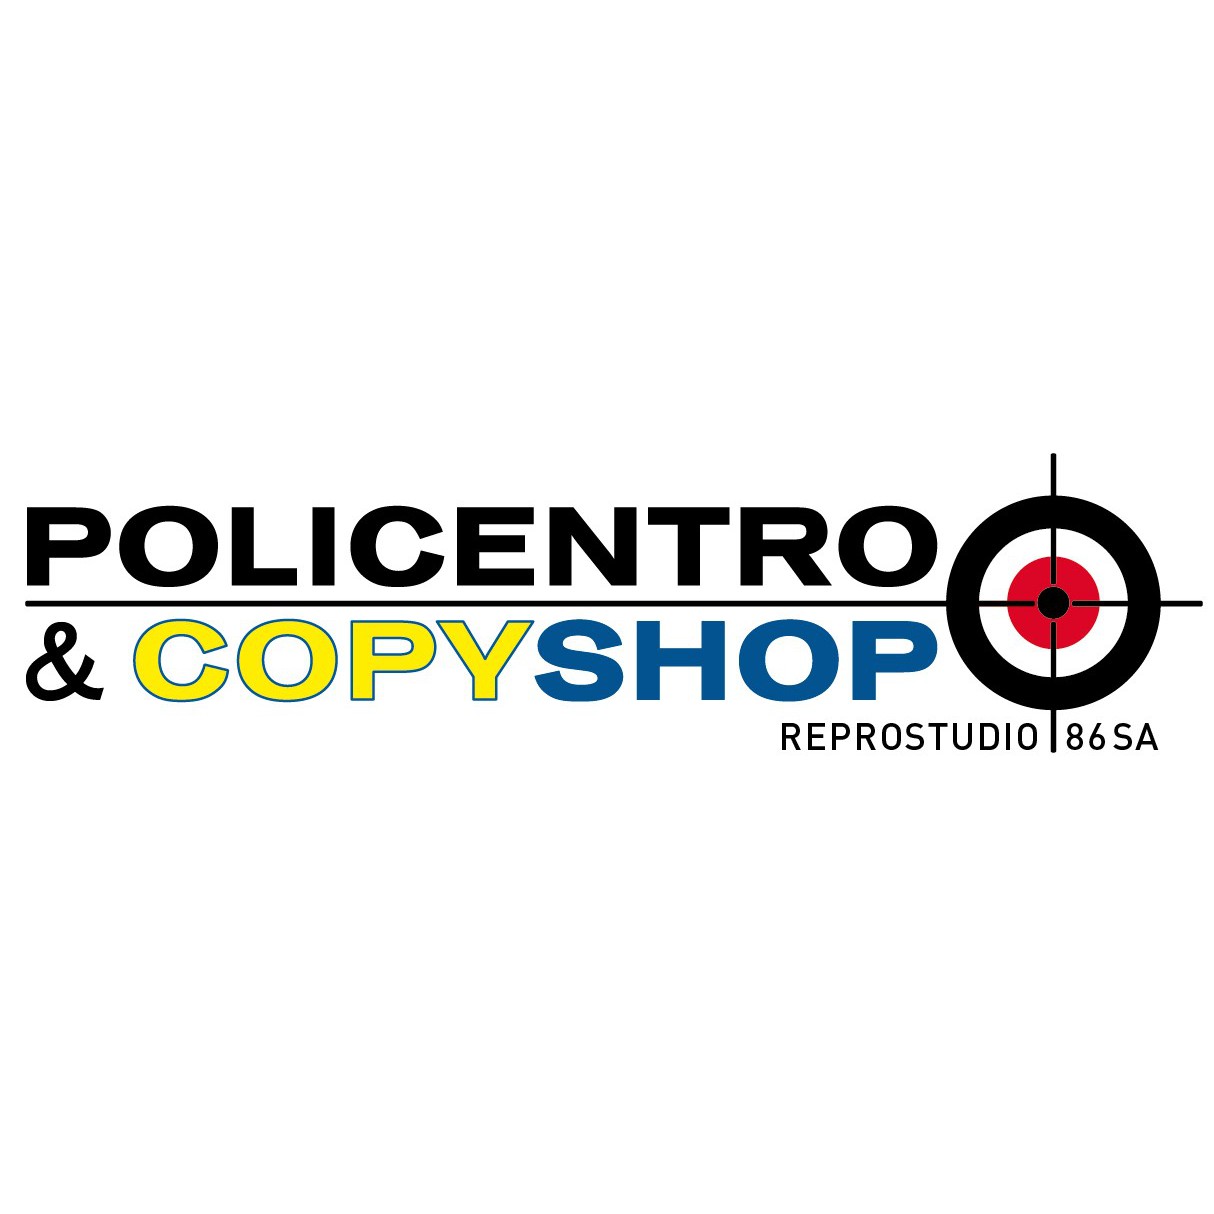 Policentro - Copyshop Logo